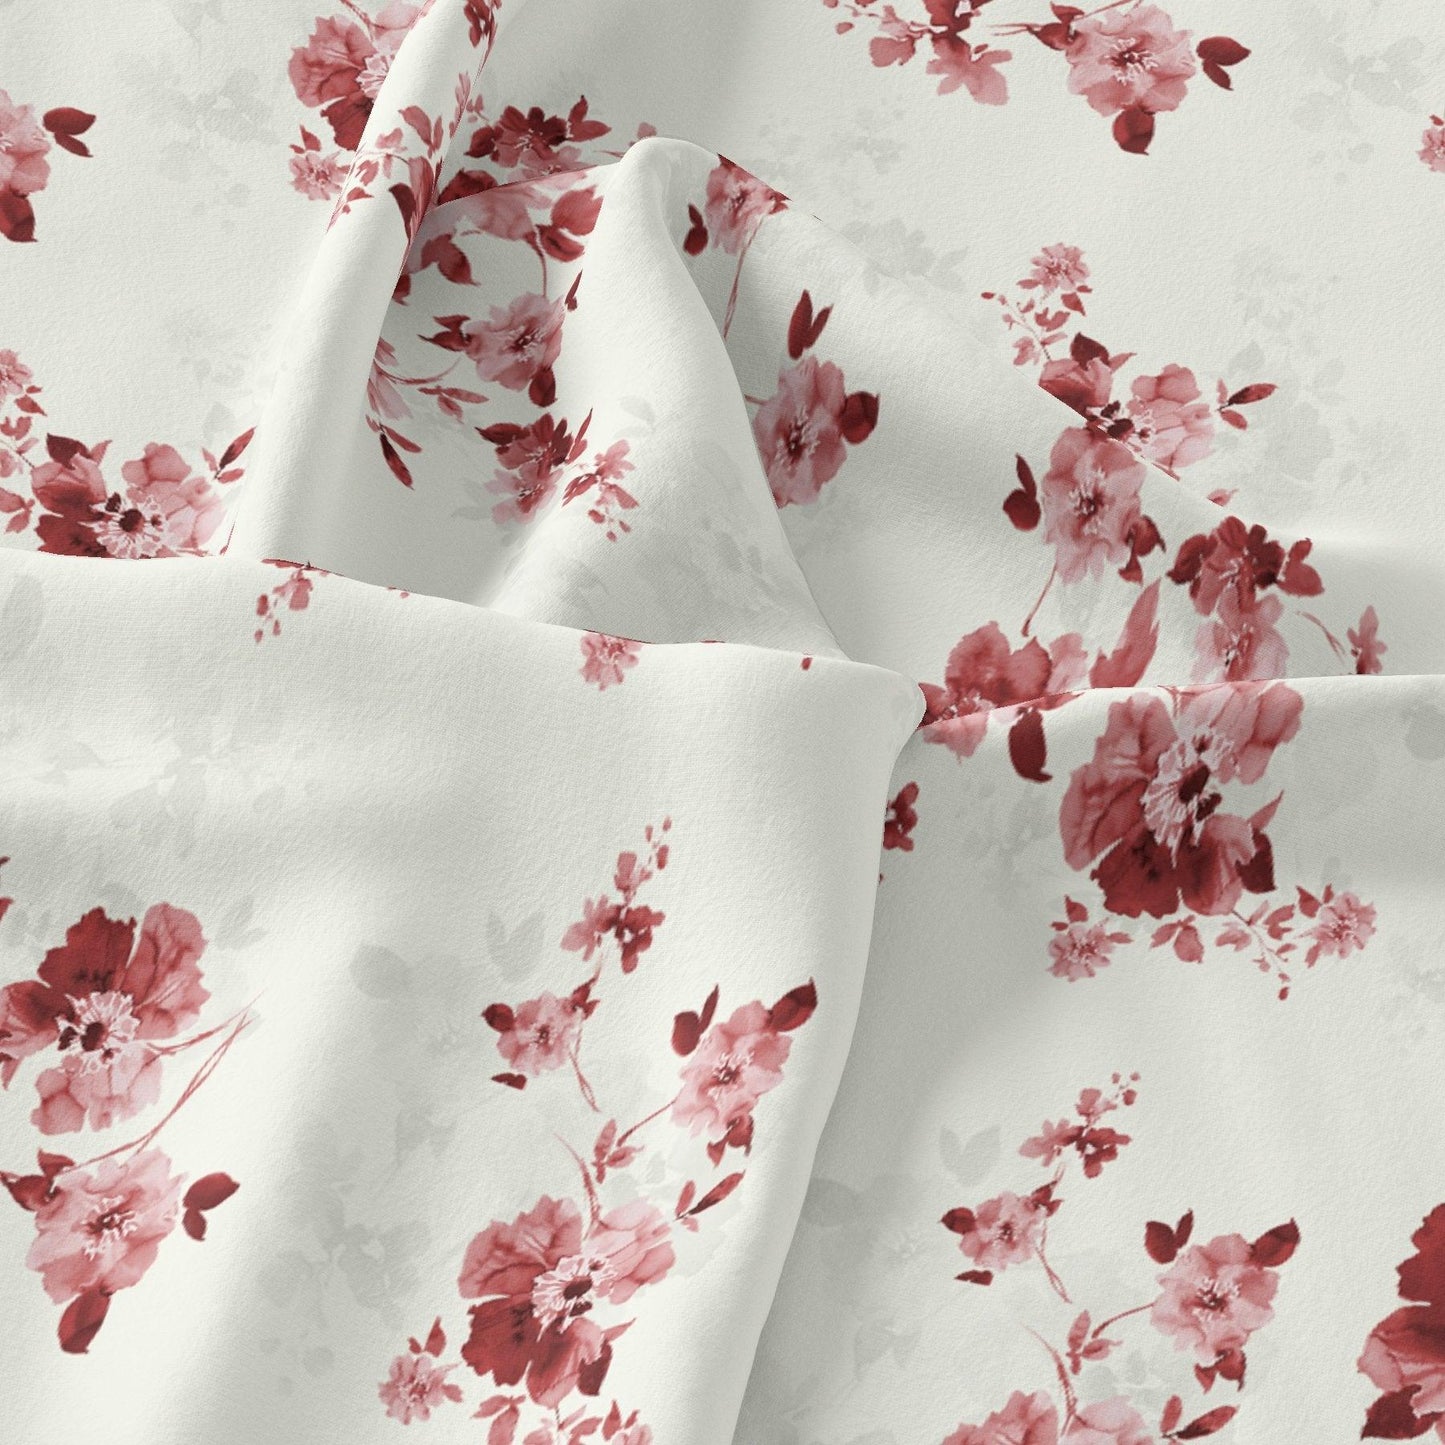 Maroon Flower Bunch Digital Printed Fabric - Weightless - FAB VOGUE Studio®